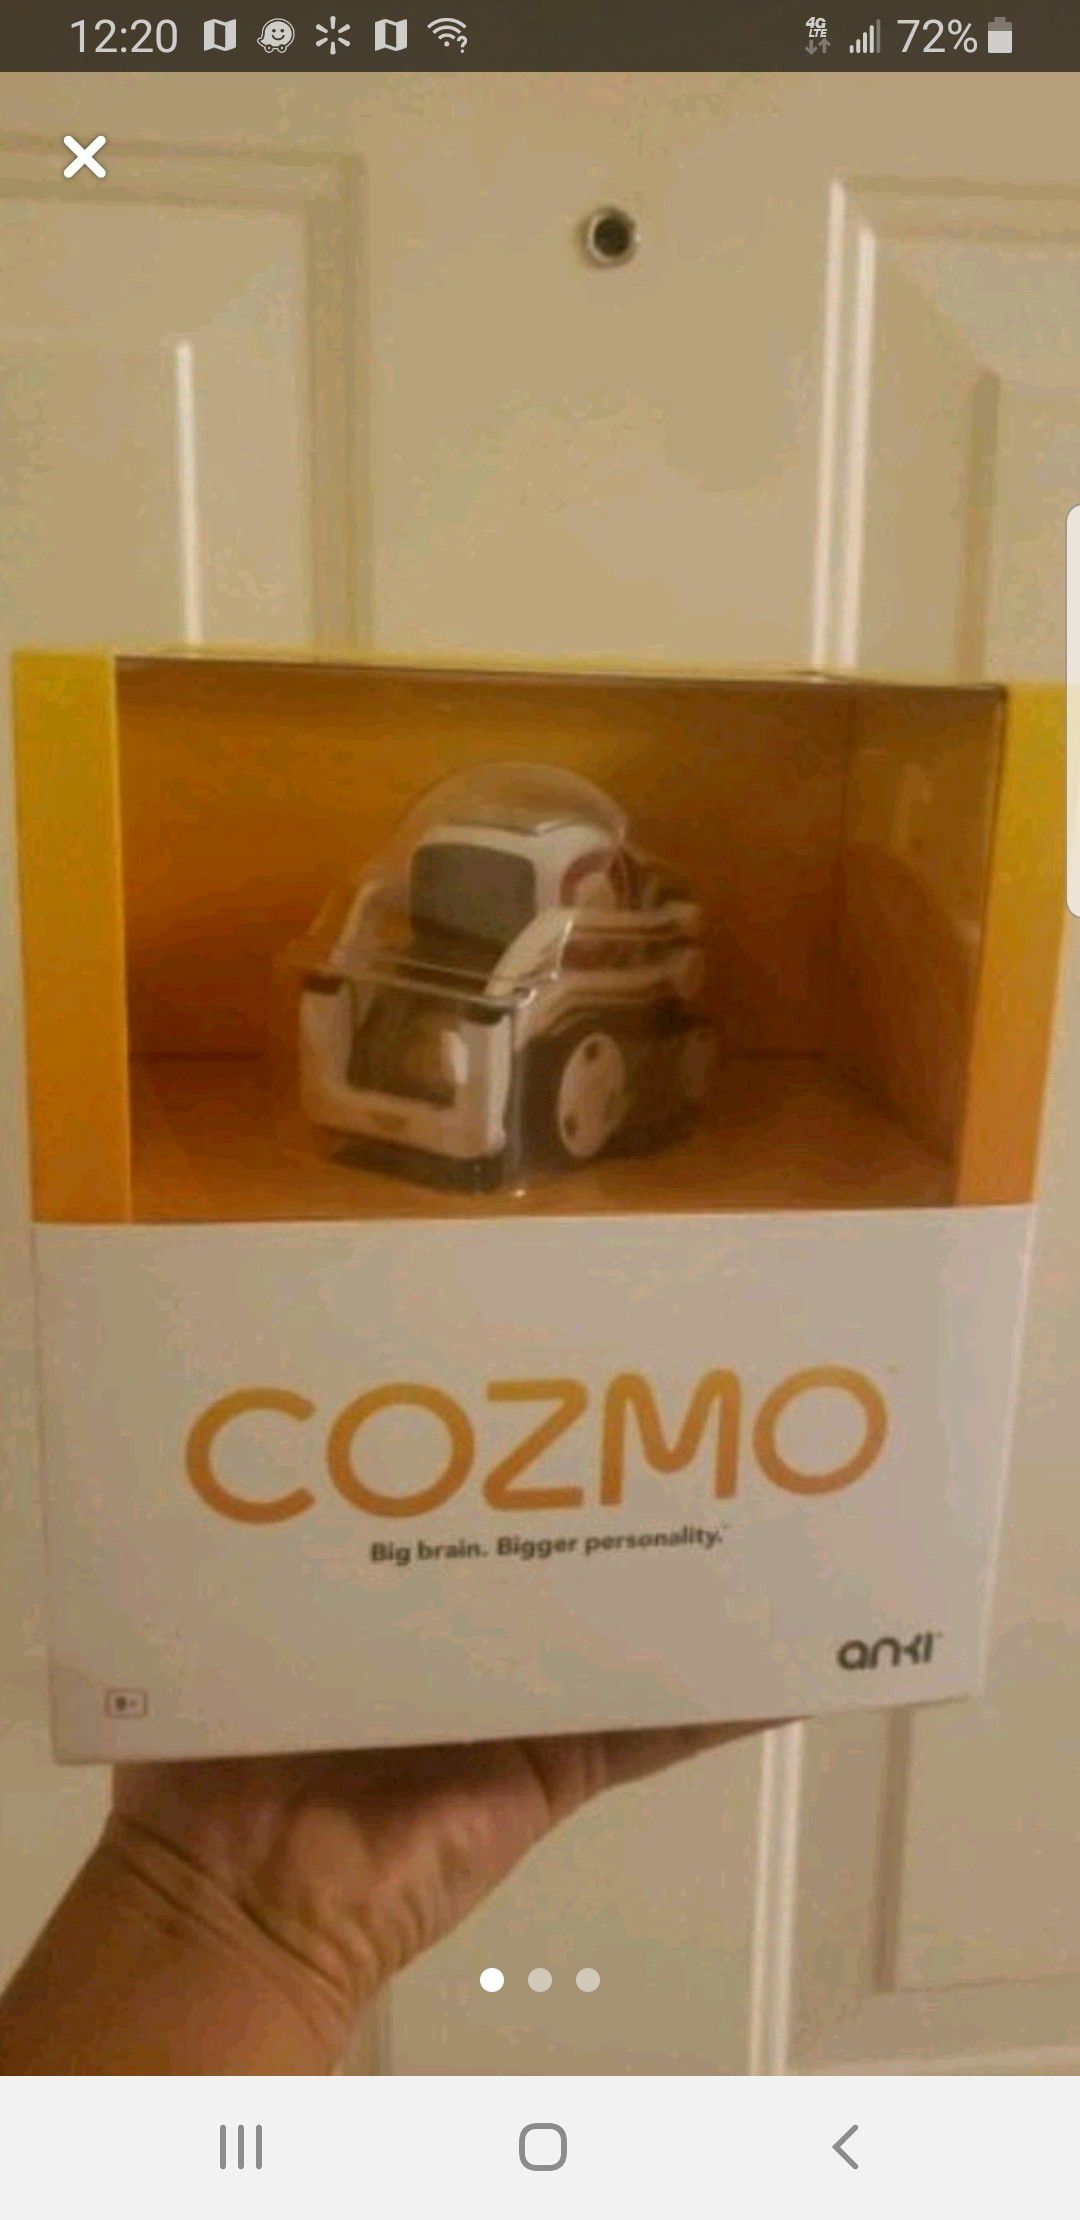 COZMO Robot